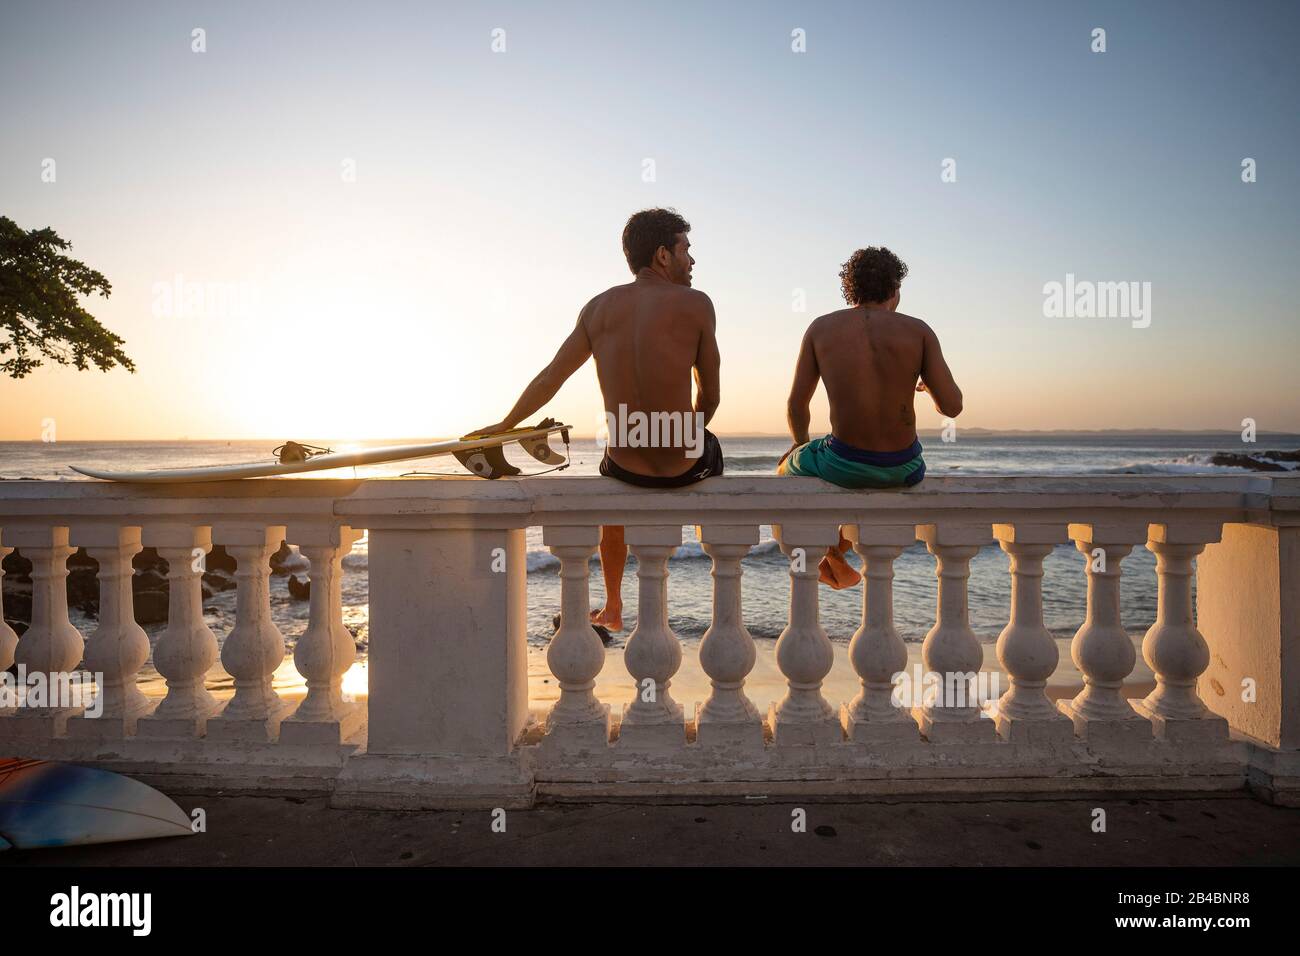 Brazil, state of Bahia, Salvador de Bahia, at sunset two surfers take a break on the seaside Stock Photo